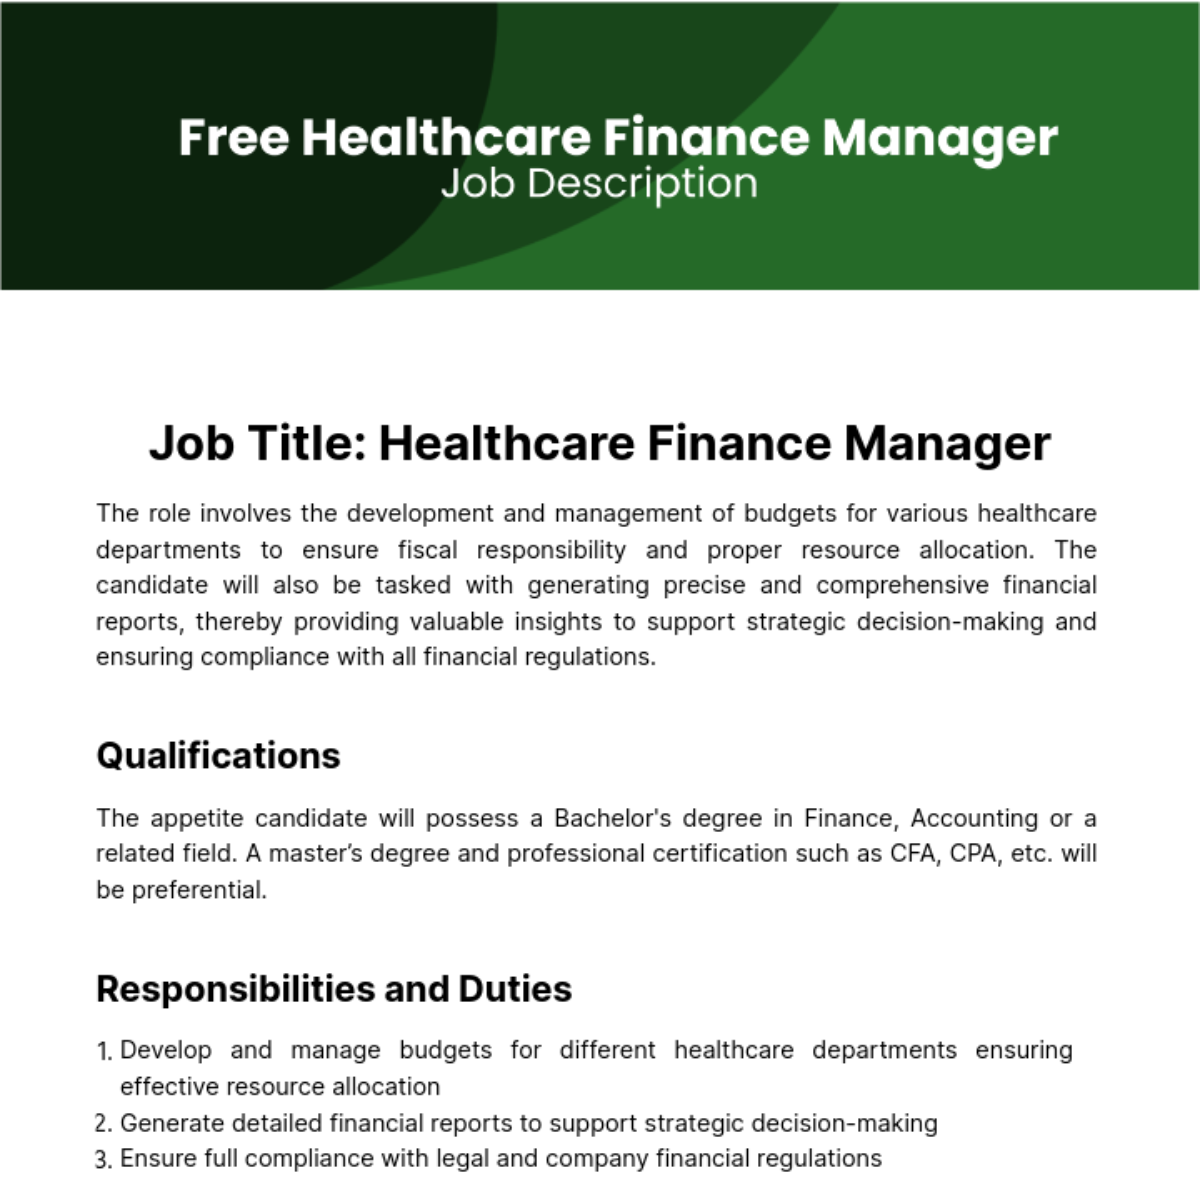 Free Healthcare Finance Manager Job Description Template